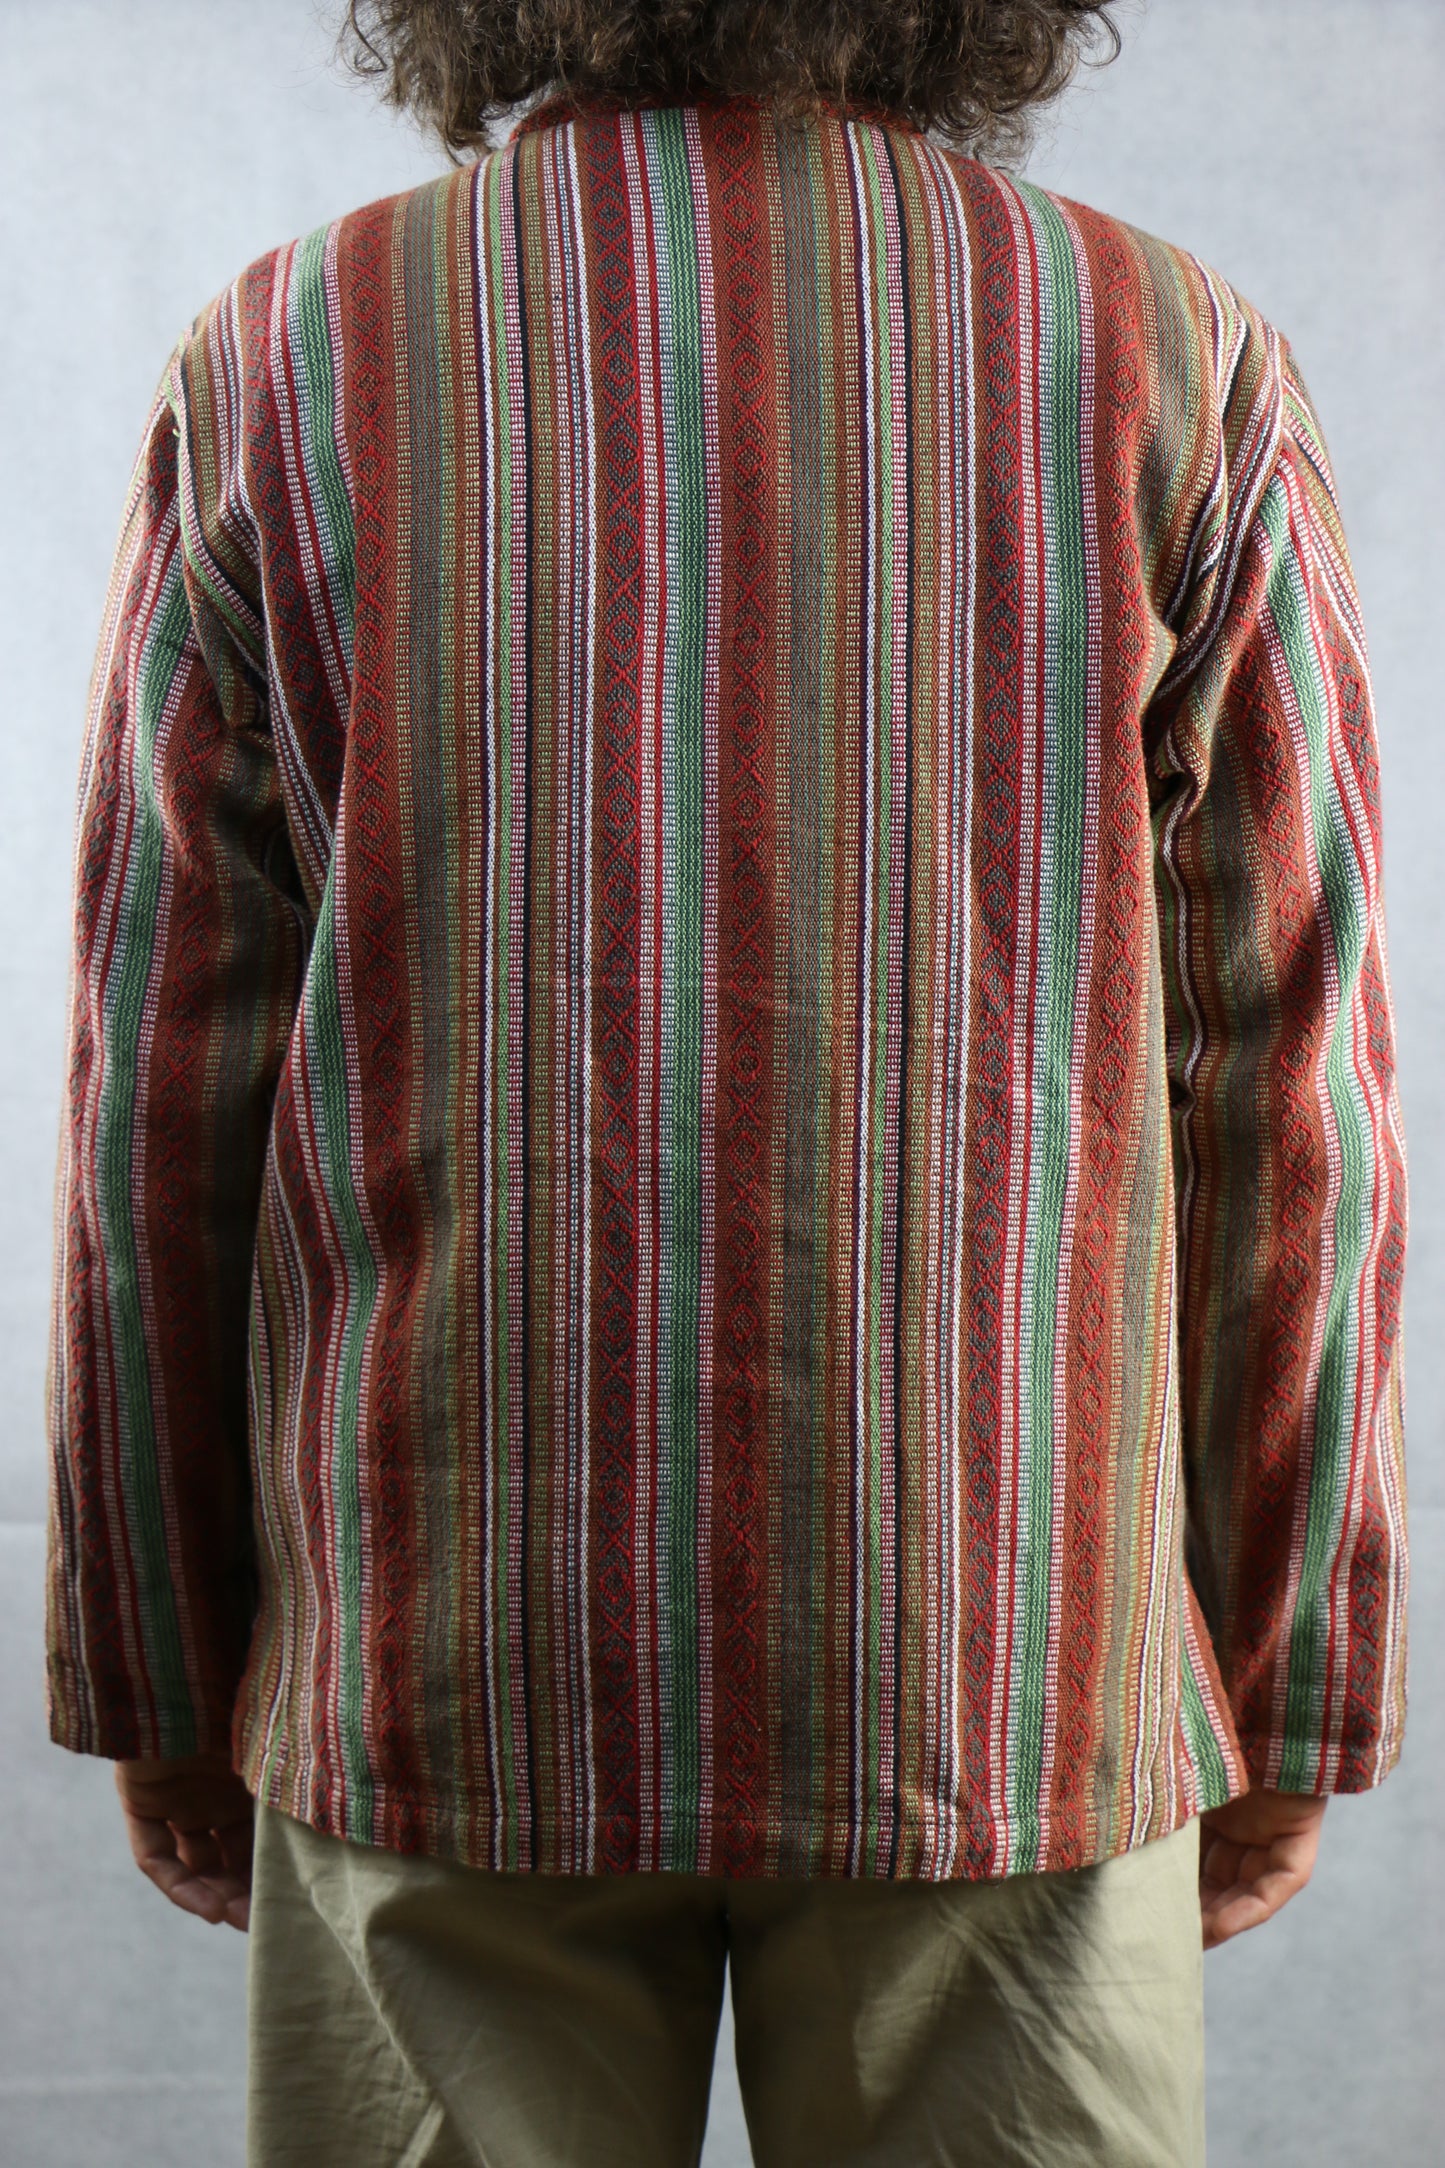 Merlin Tribe Jacket - vintage clothing clochard92.com